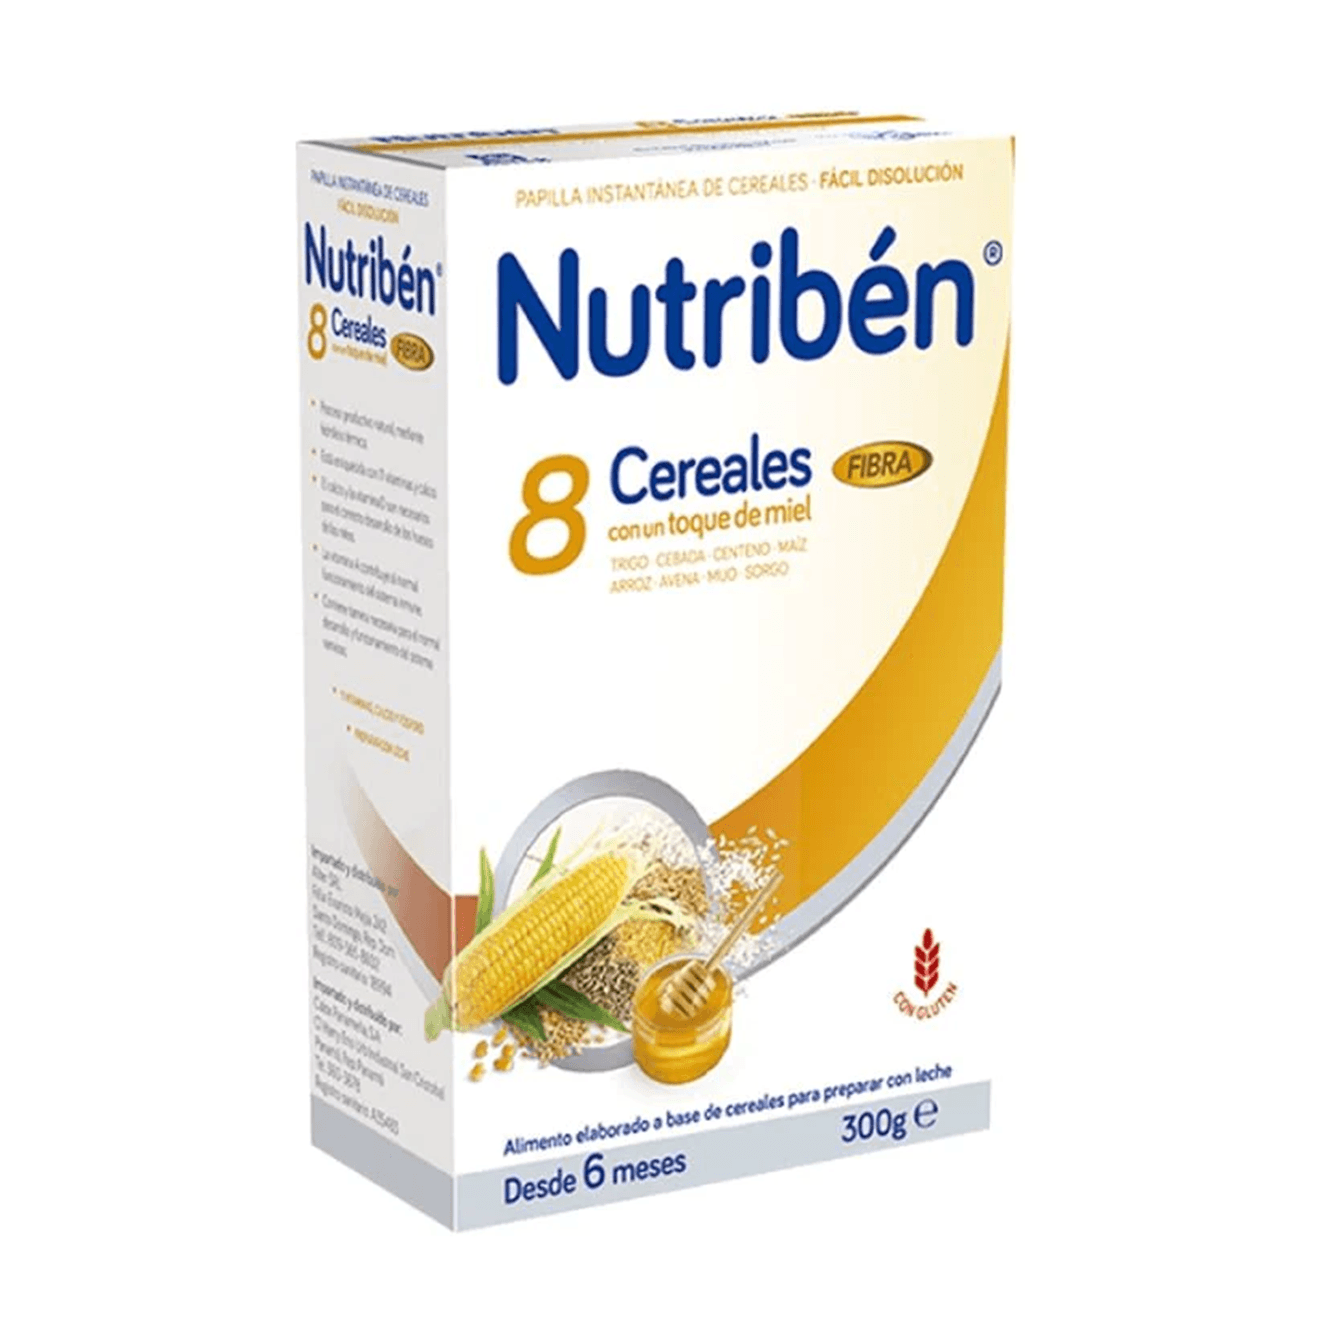 Nutribén® 8 Céréales - Nutriben International